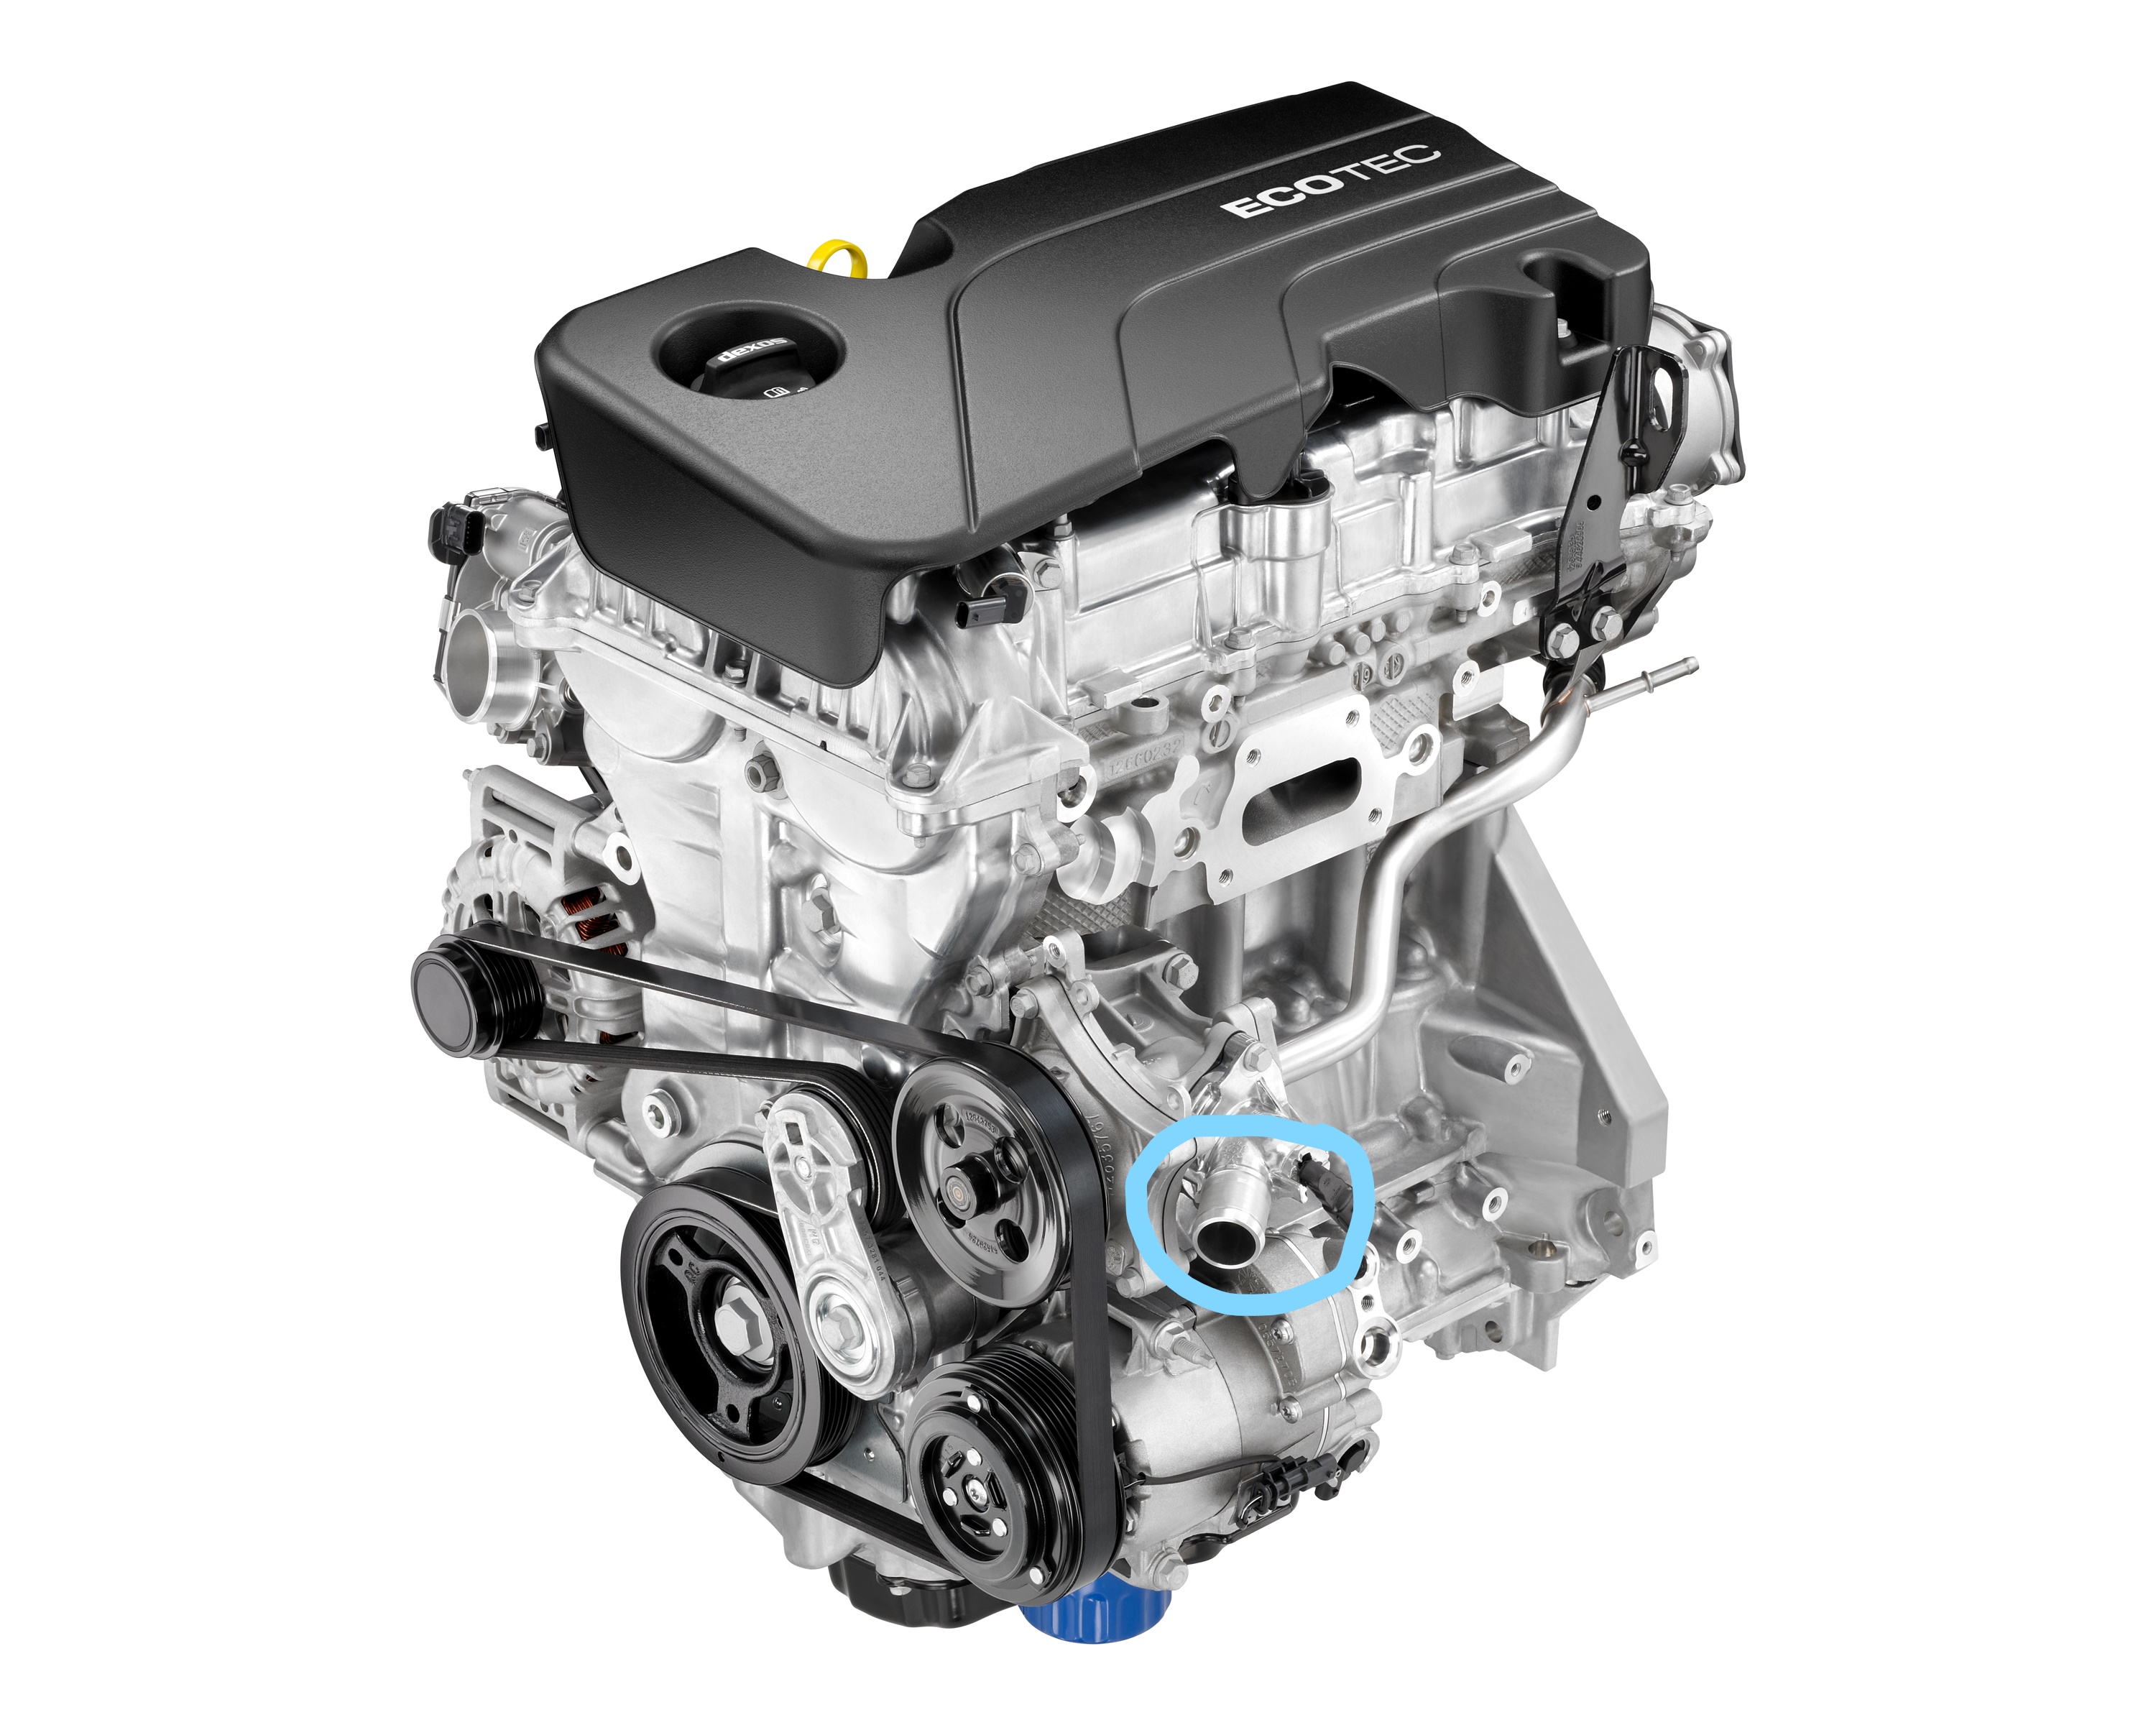 Inked2015-GM-Ecotec-Engines-2_LI.jpg